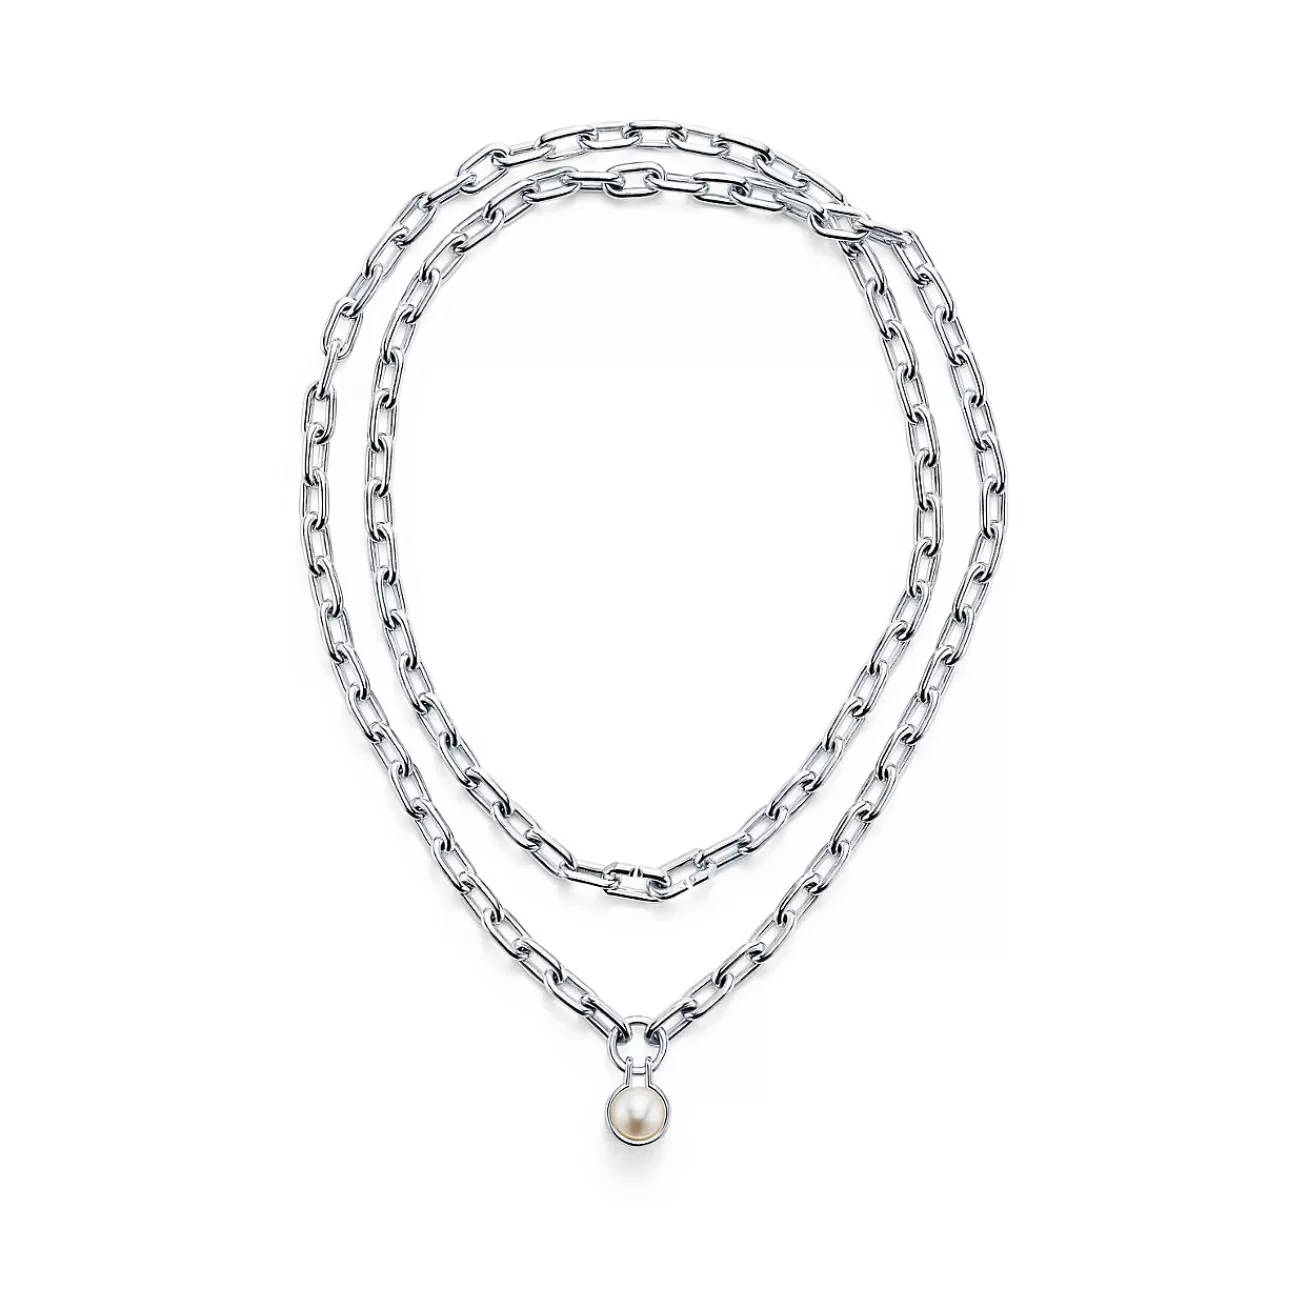 Tiffany & Co. Tiffany HardWear freshwater pearl necklace in sterling silver. | ^ Necklaces & Pendants | Men's Jewelry